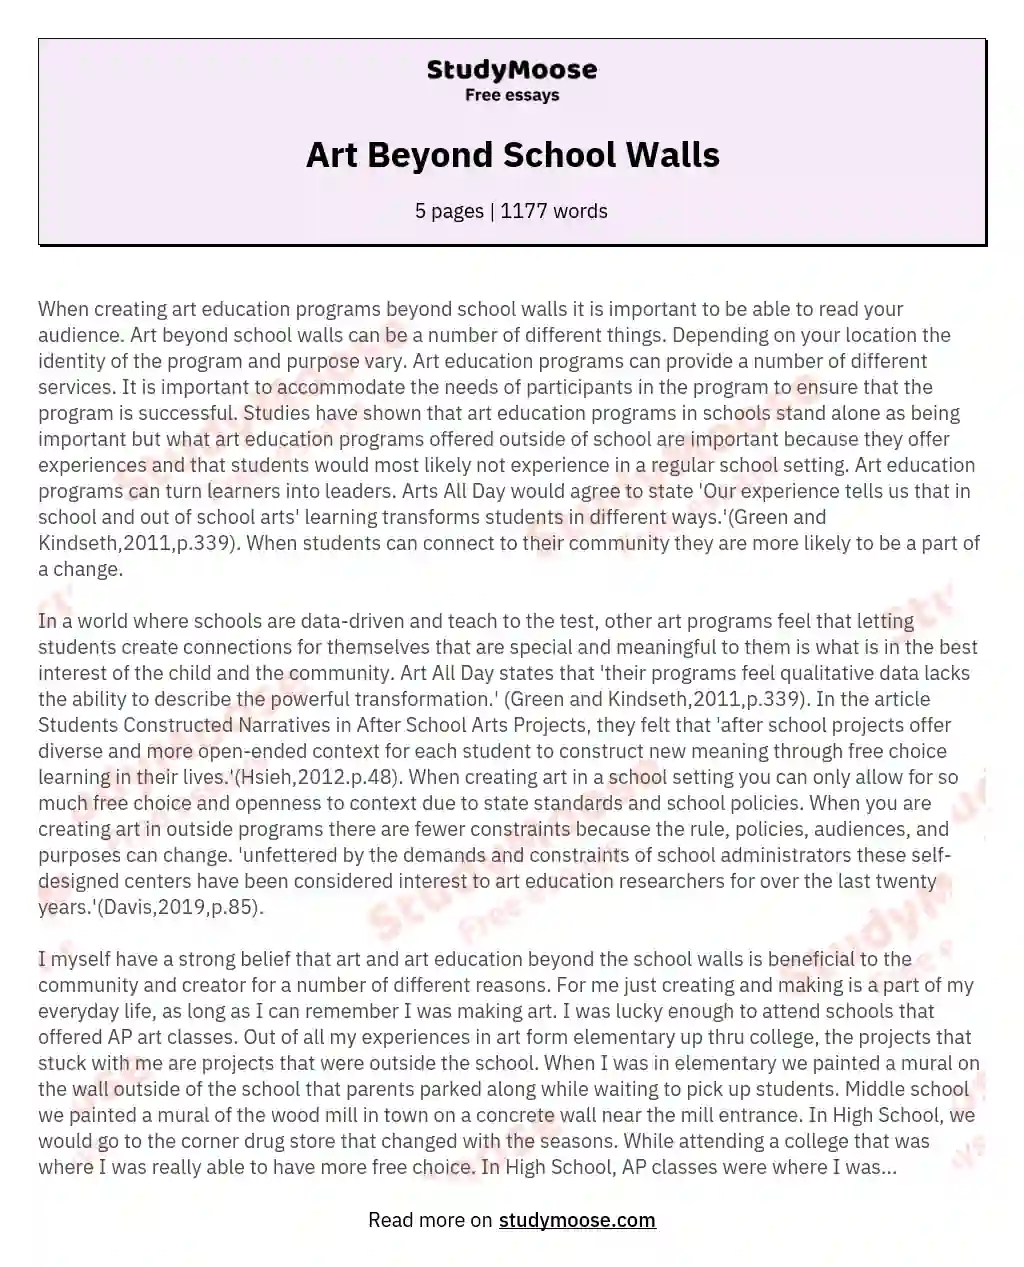 Art Beyond School Walls essay